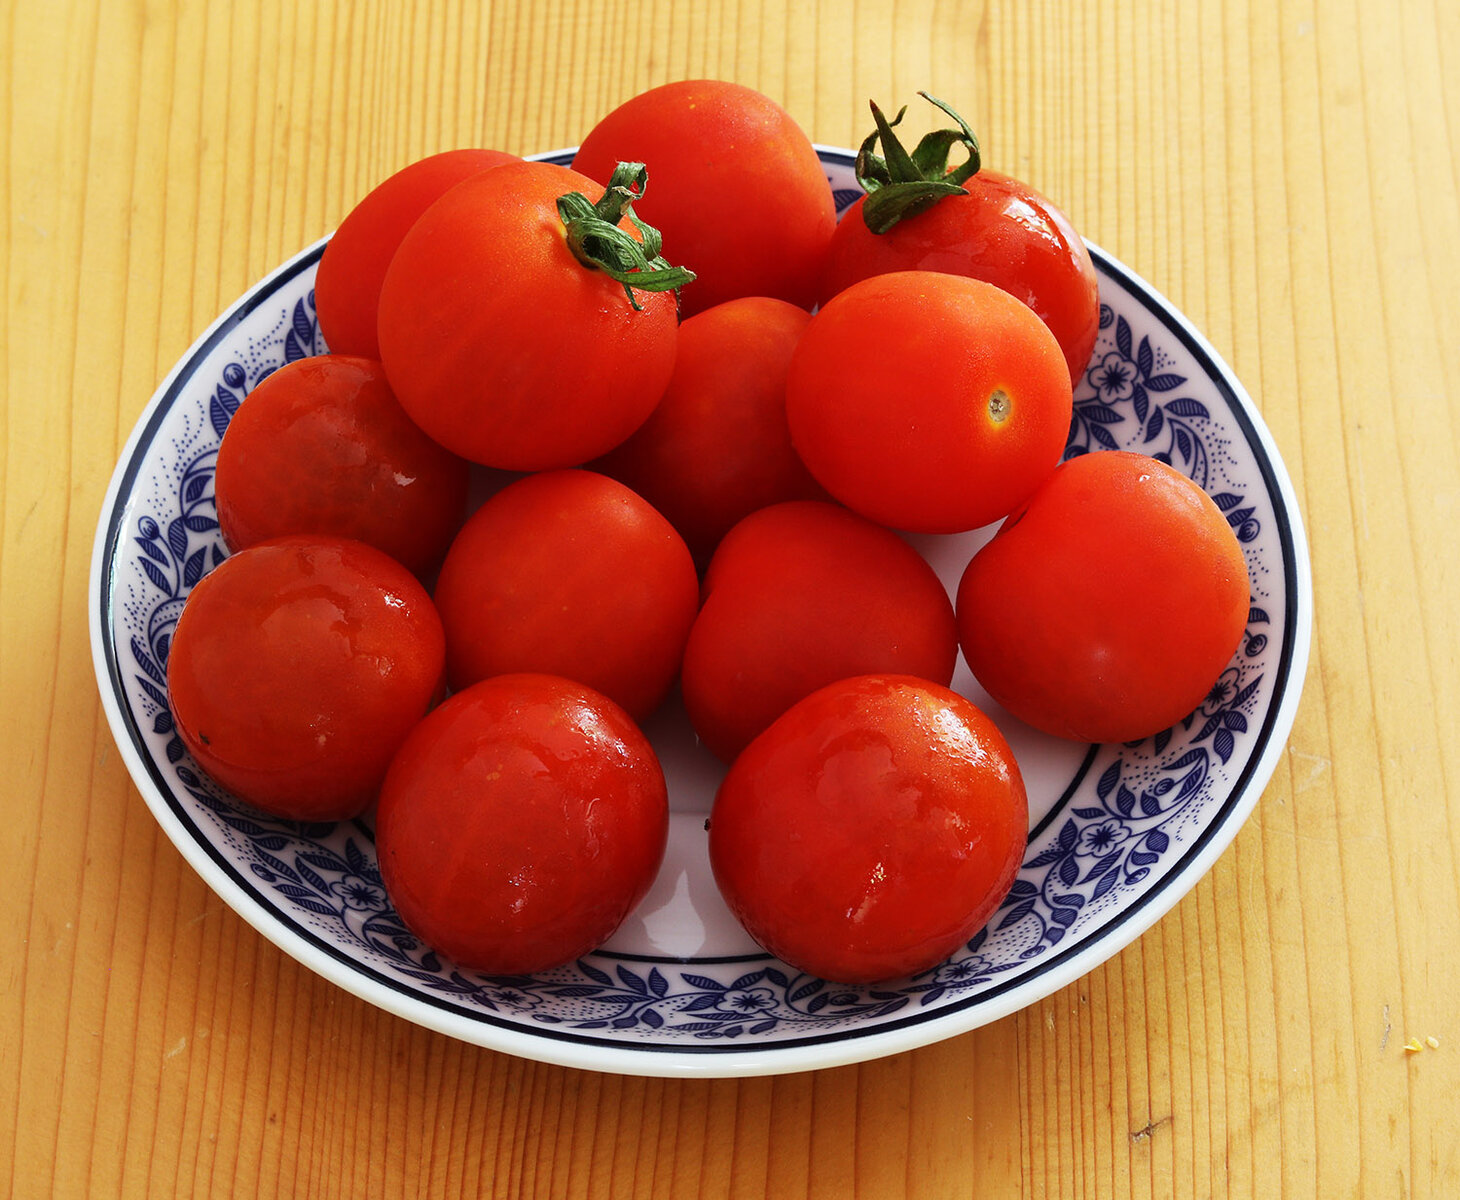 Tomatoes 4 s.jpg